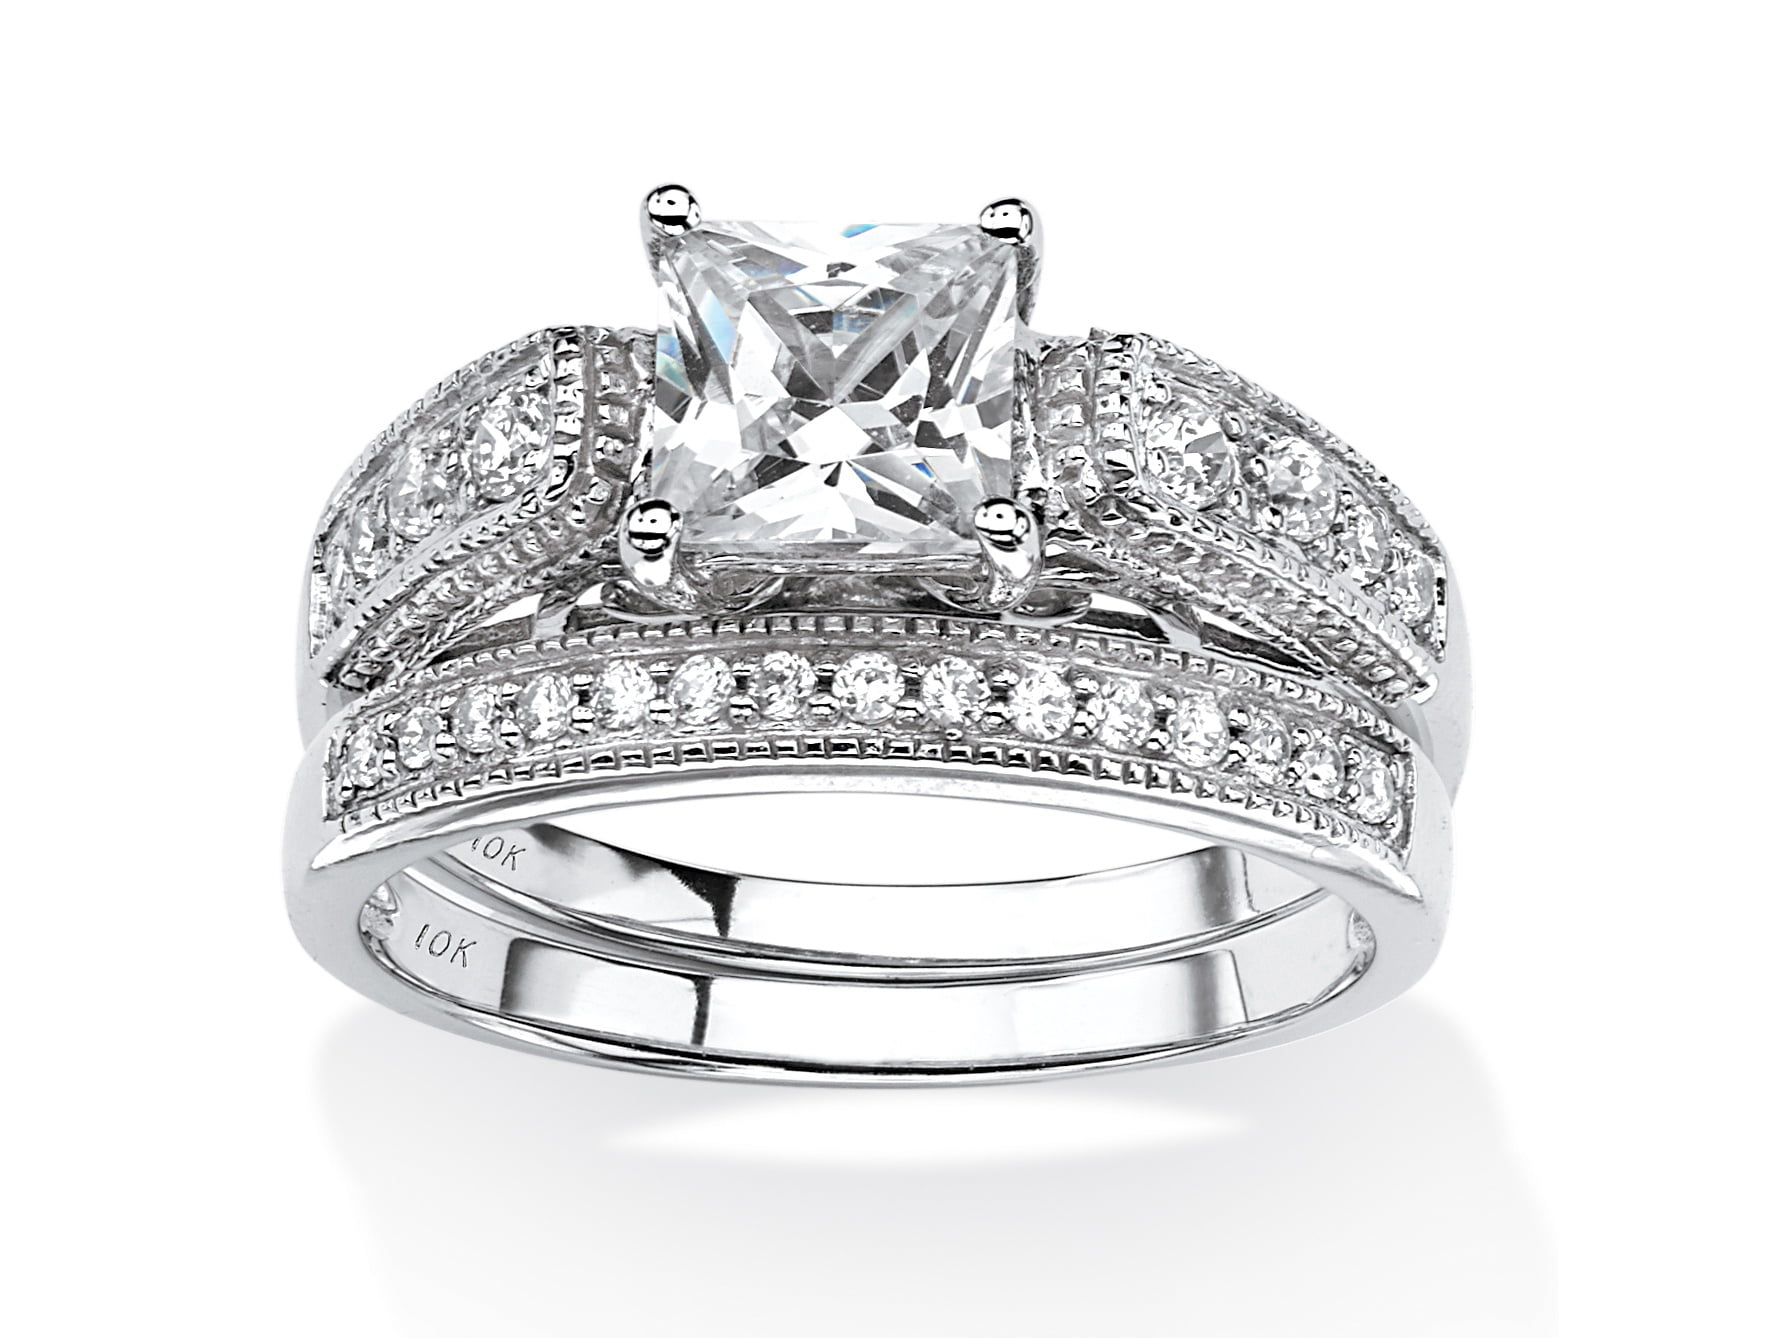 ringcrown Bridal Sets Black Gold Plated Womens Wedding Ring Sets Princess Cut 6mm Red Cz 2pcs Engagement Ring